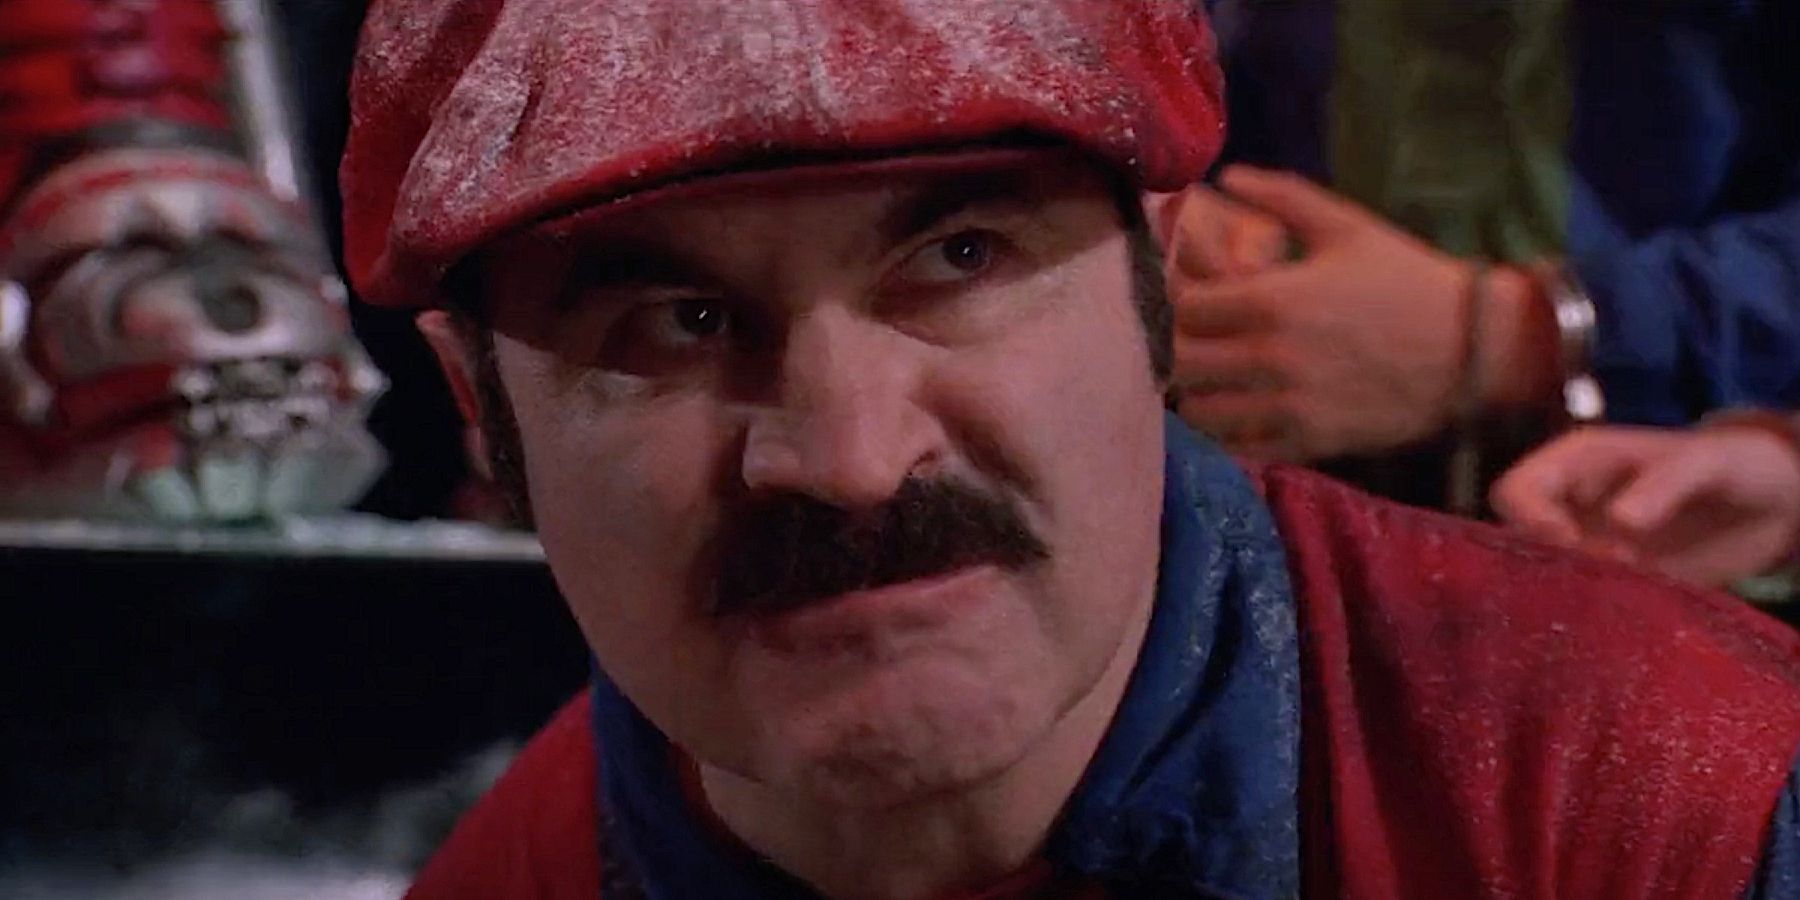 Bob Hoskins as Mario from Super Mario Bros.